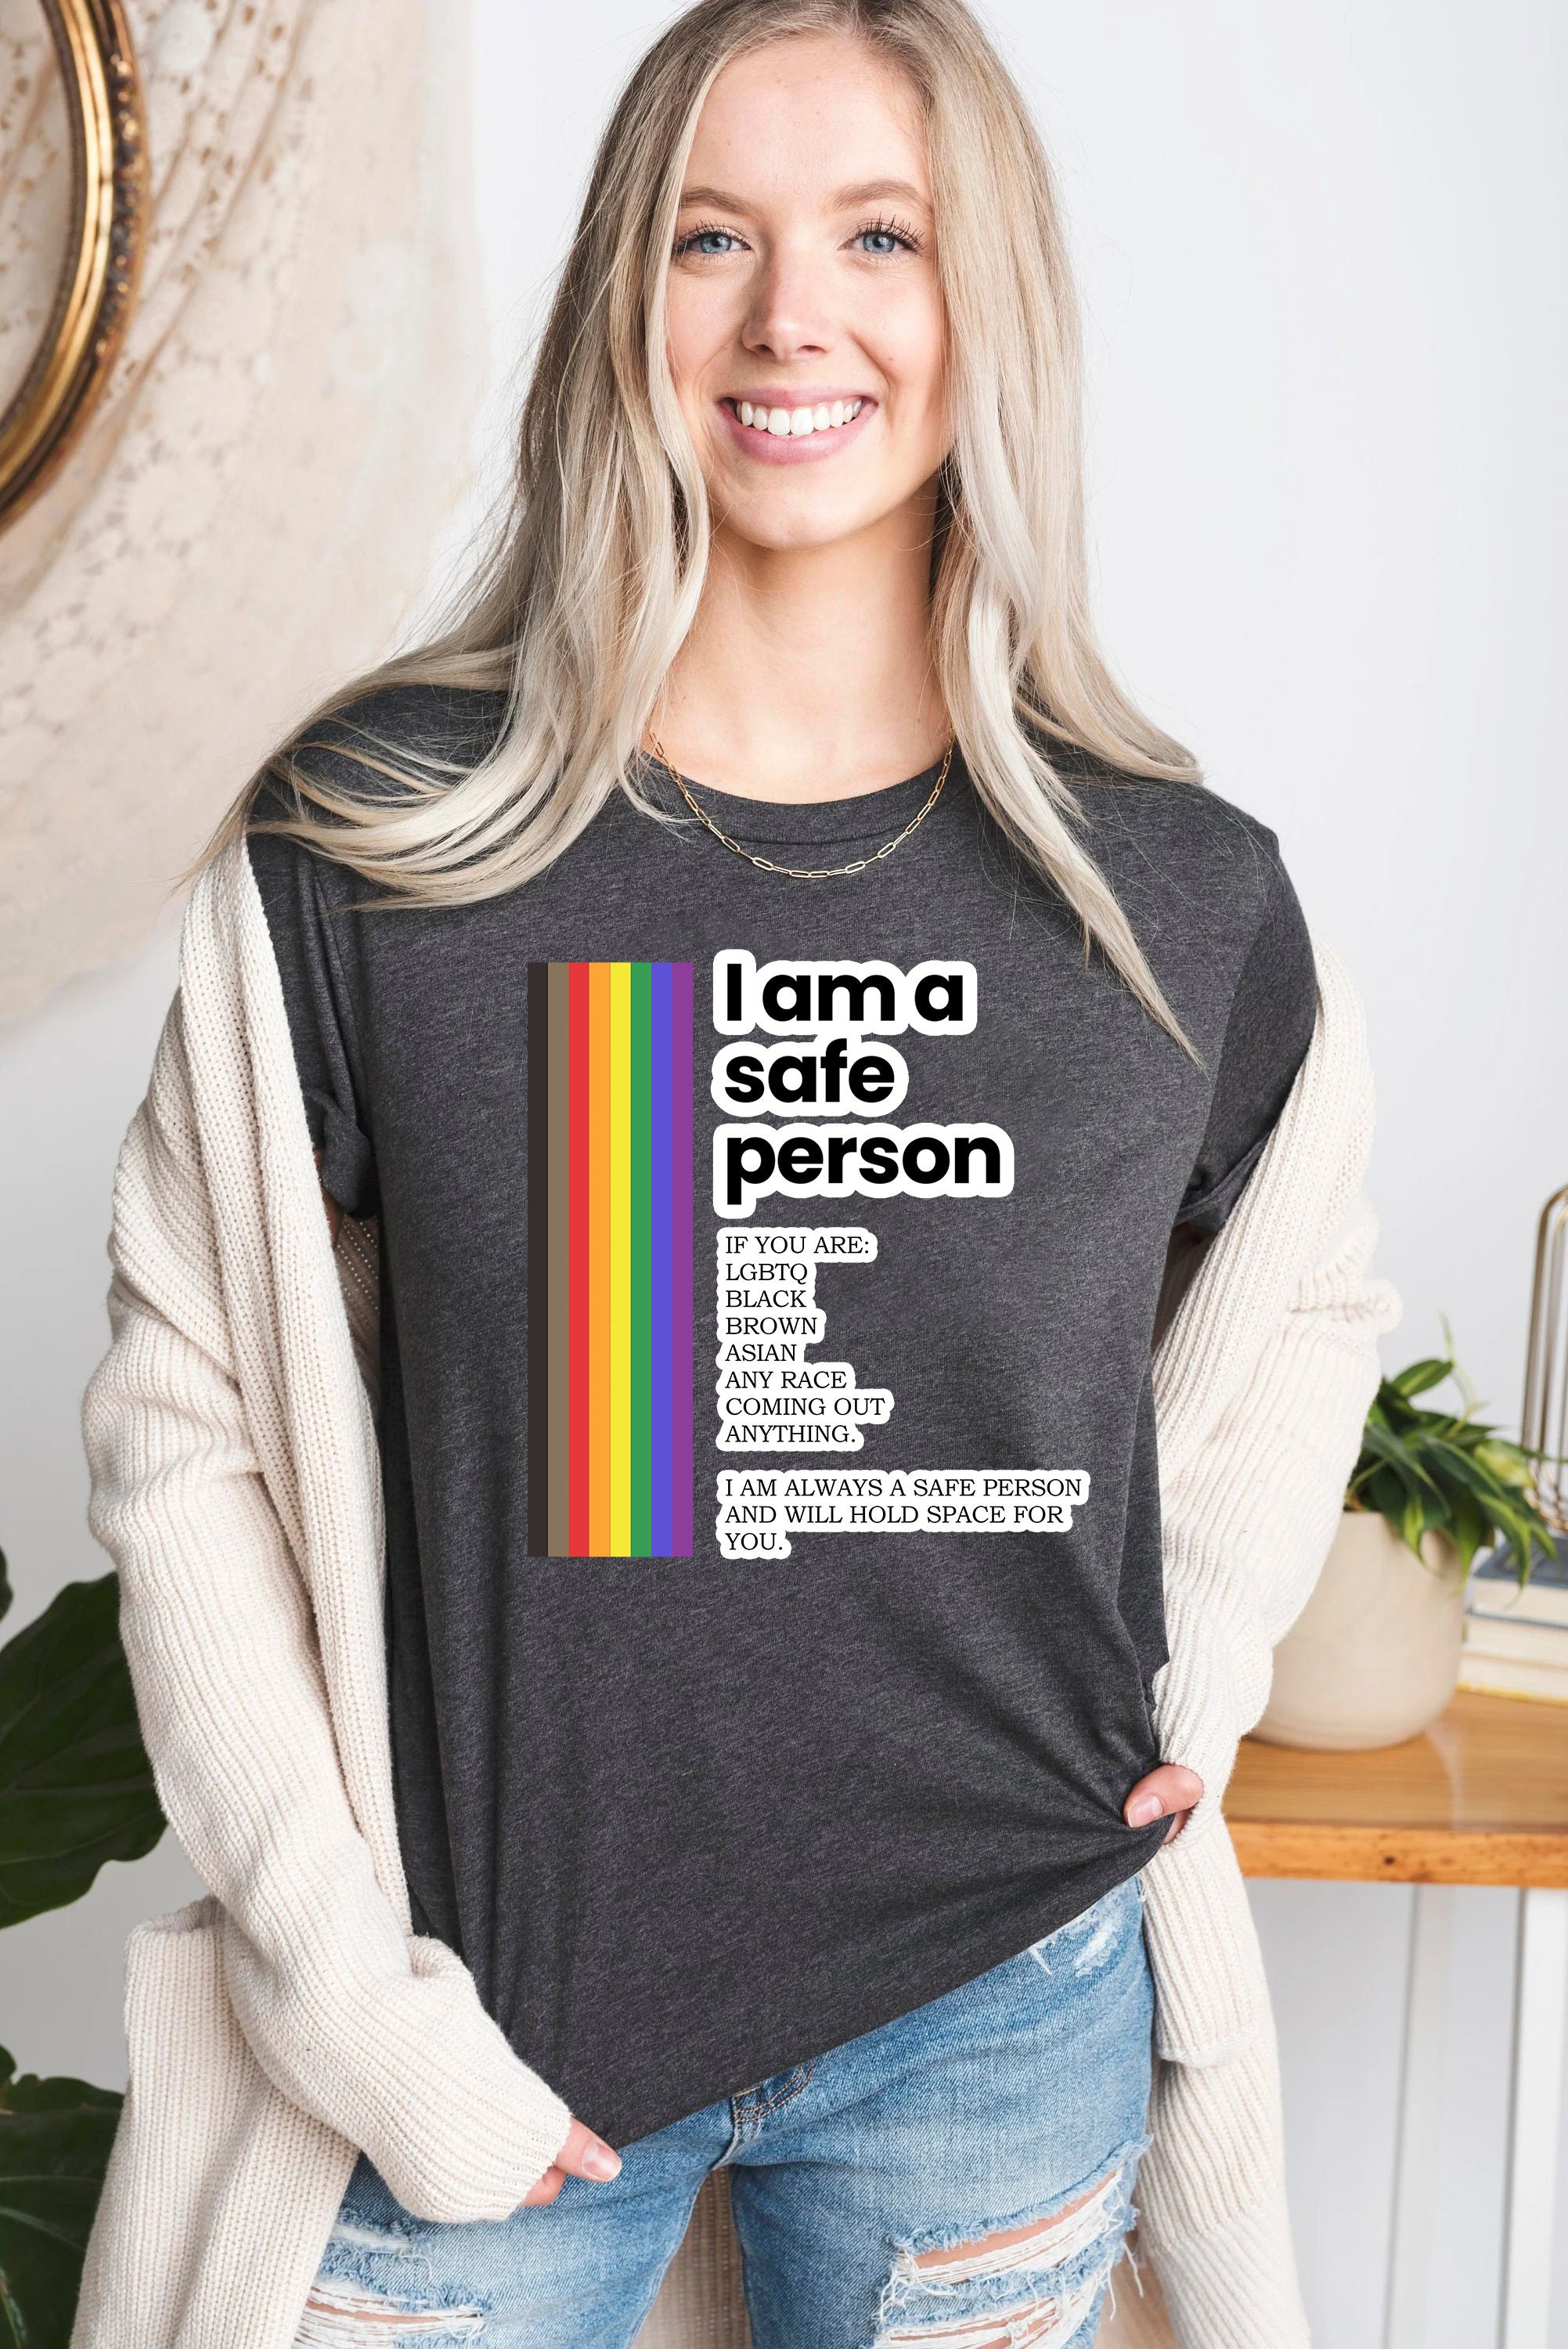 Discover Ally Shirt, Safe Person Shirt, LGBTQ Ally T Shirt, LGBT T Shirt For Ally, Safe Space Pride Shirt, Ally Gift, Rainbow Tshirt, Equality